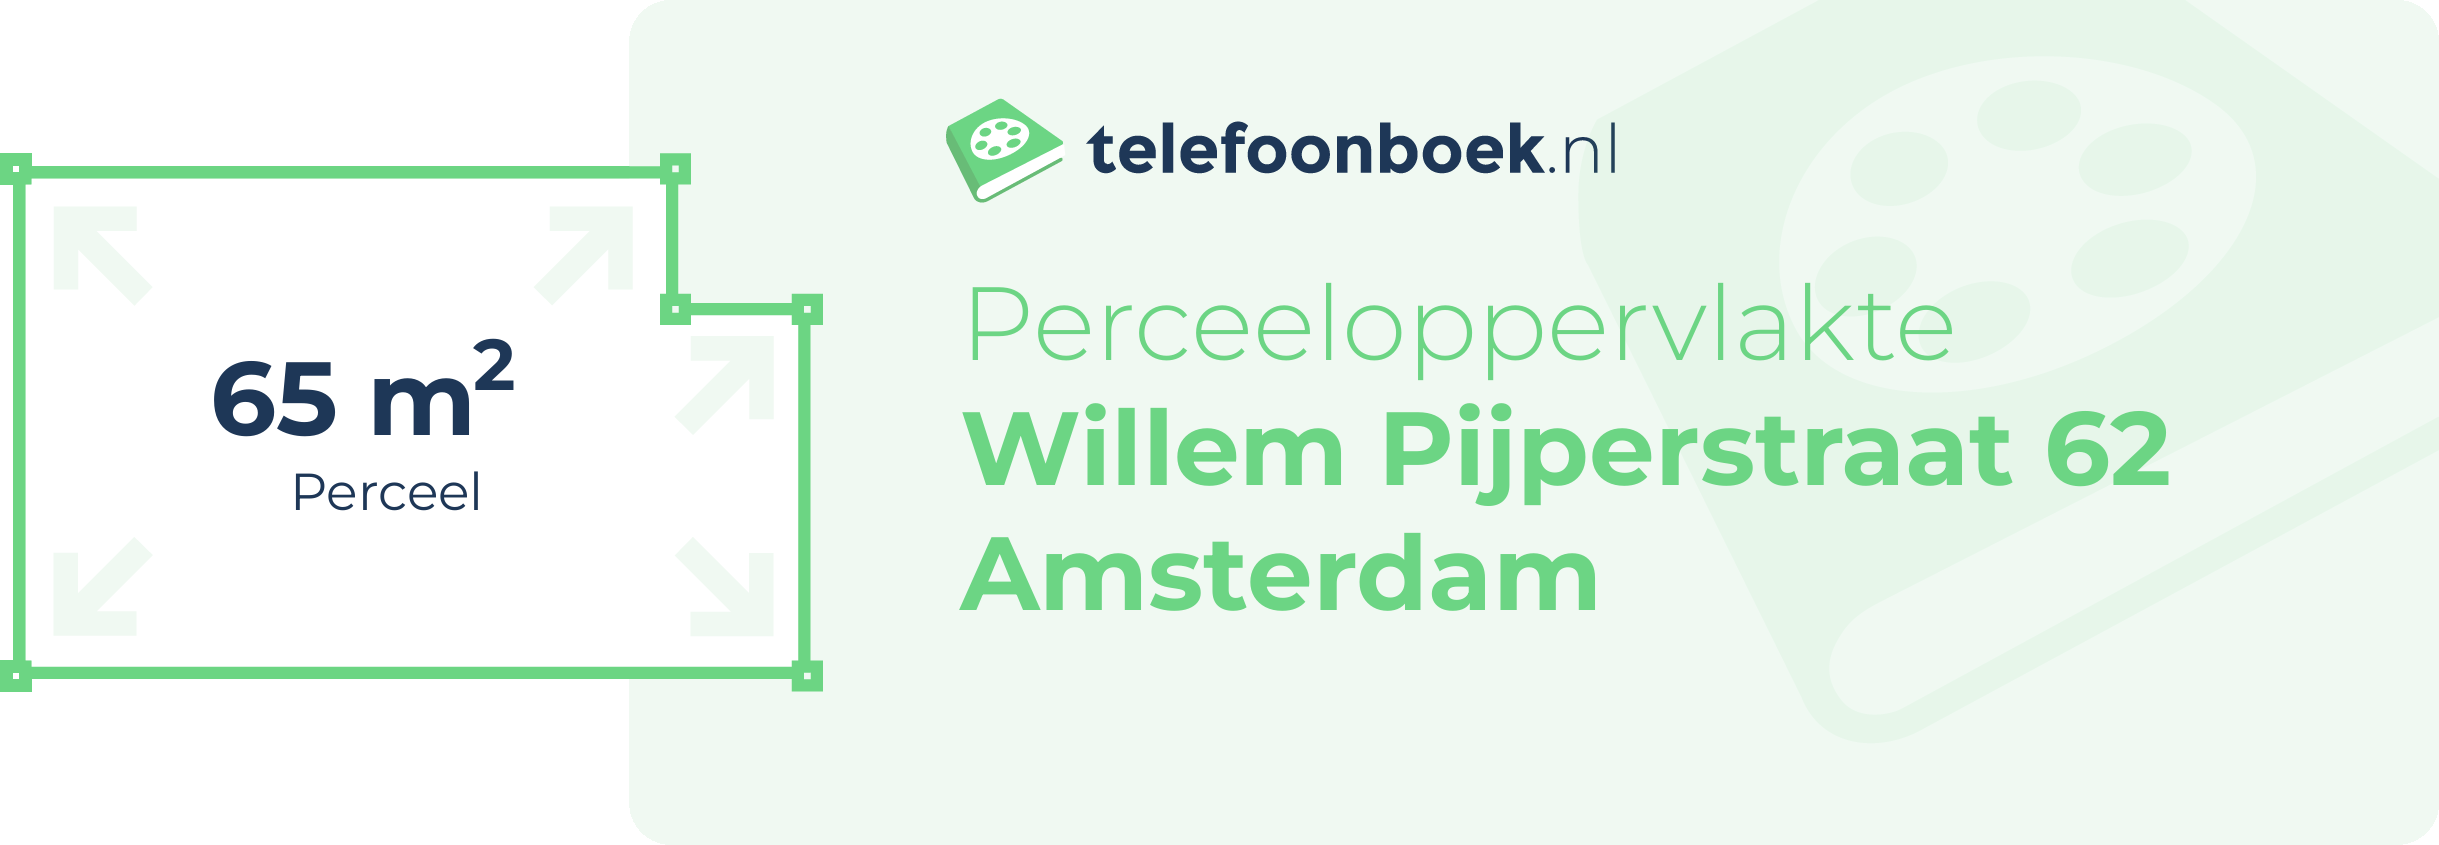 Perceeloppervlakte Willem Pijperstraat 62 Amsterdam